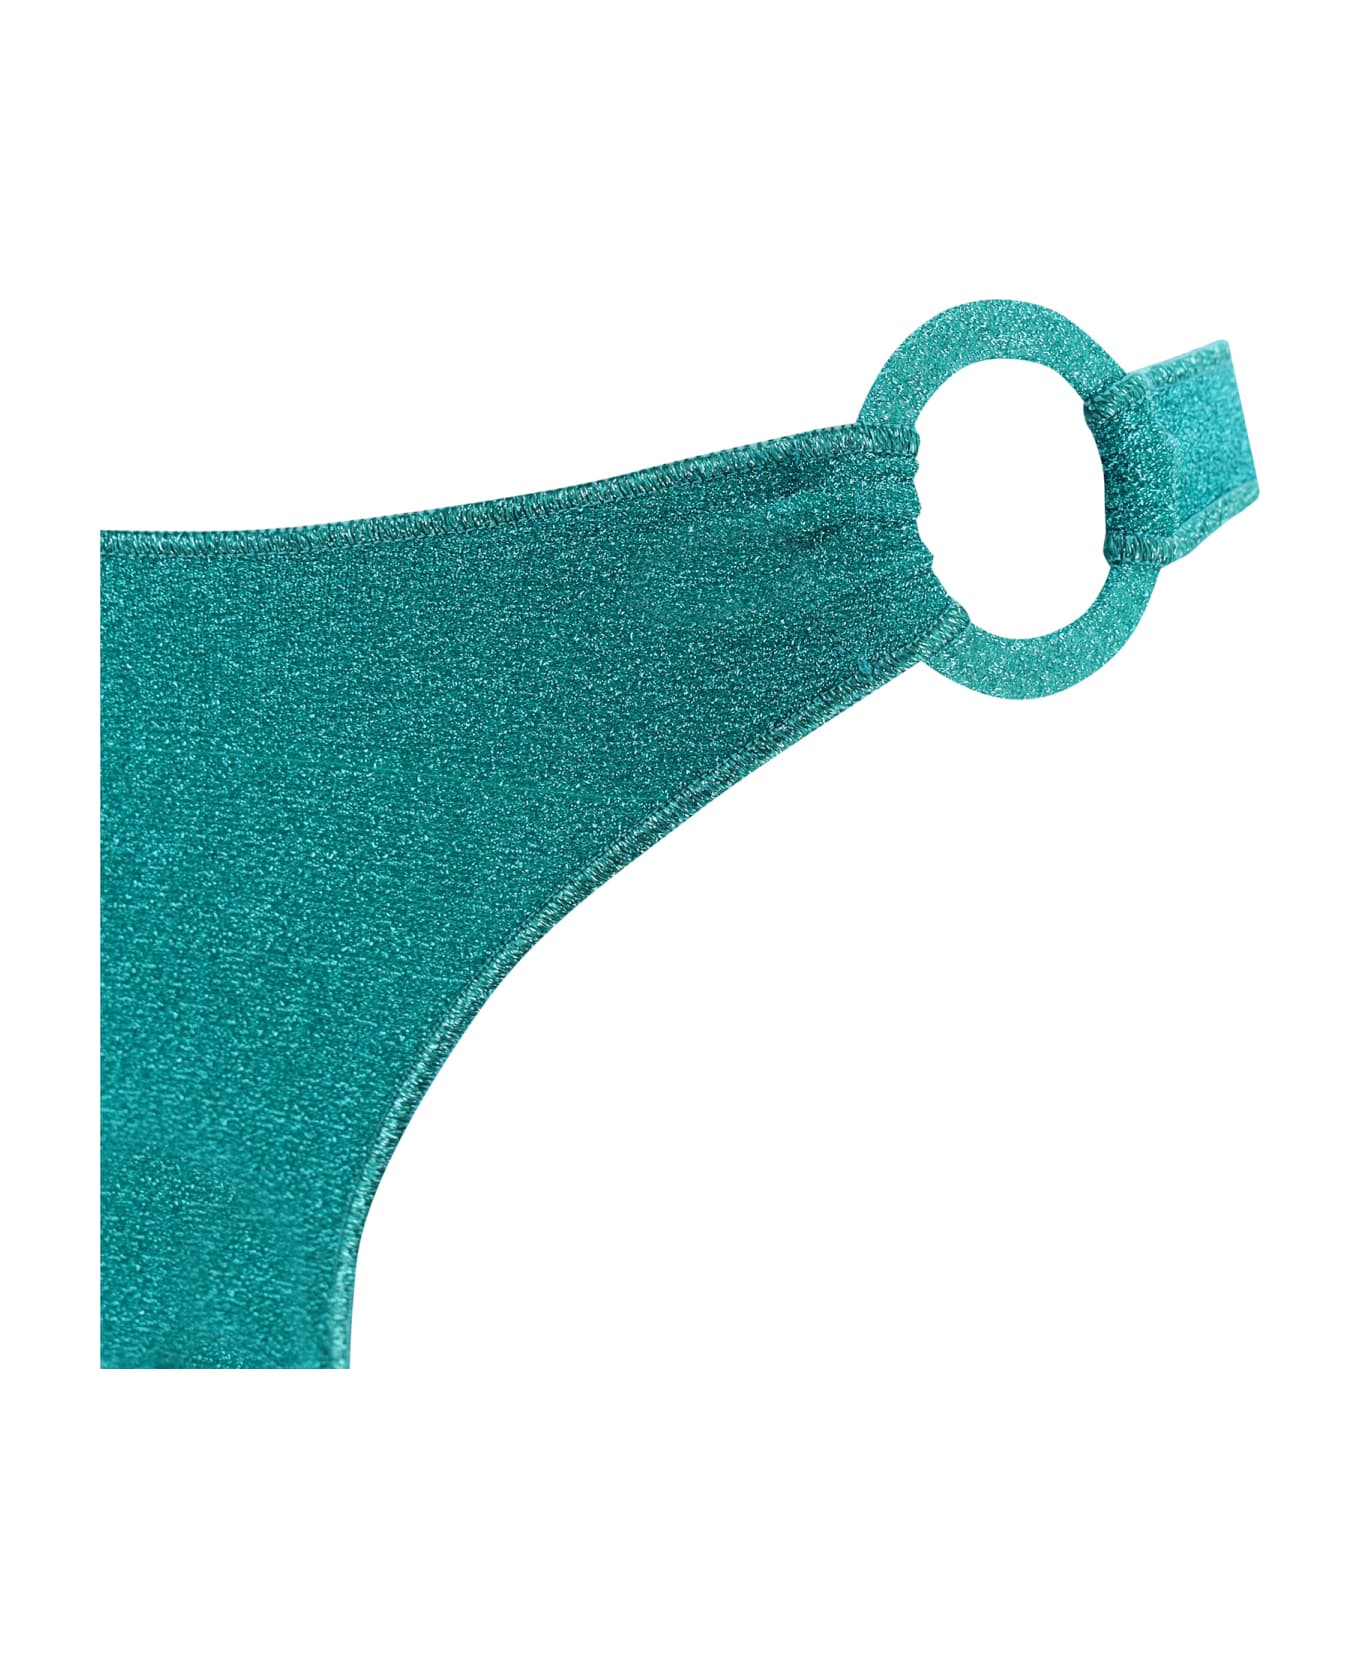 Oseree Lumiere Ring Swimsuit - Aquamarine 水着